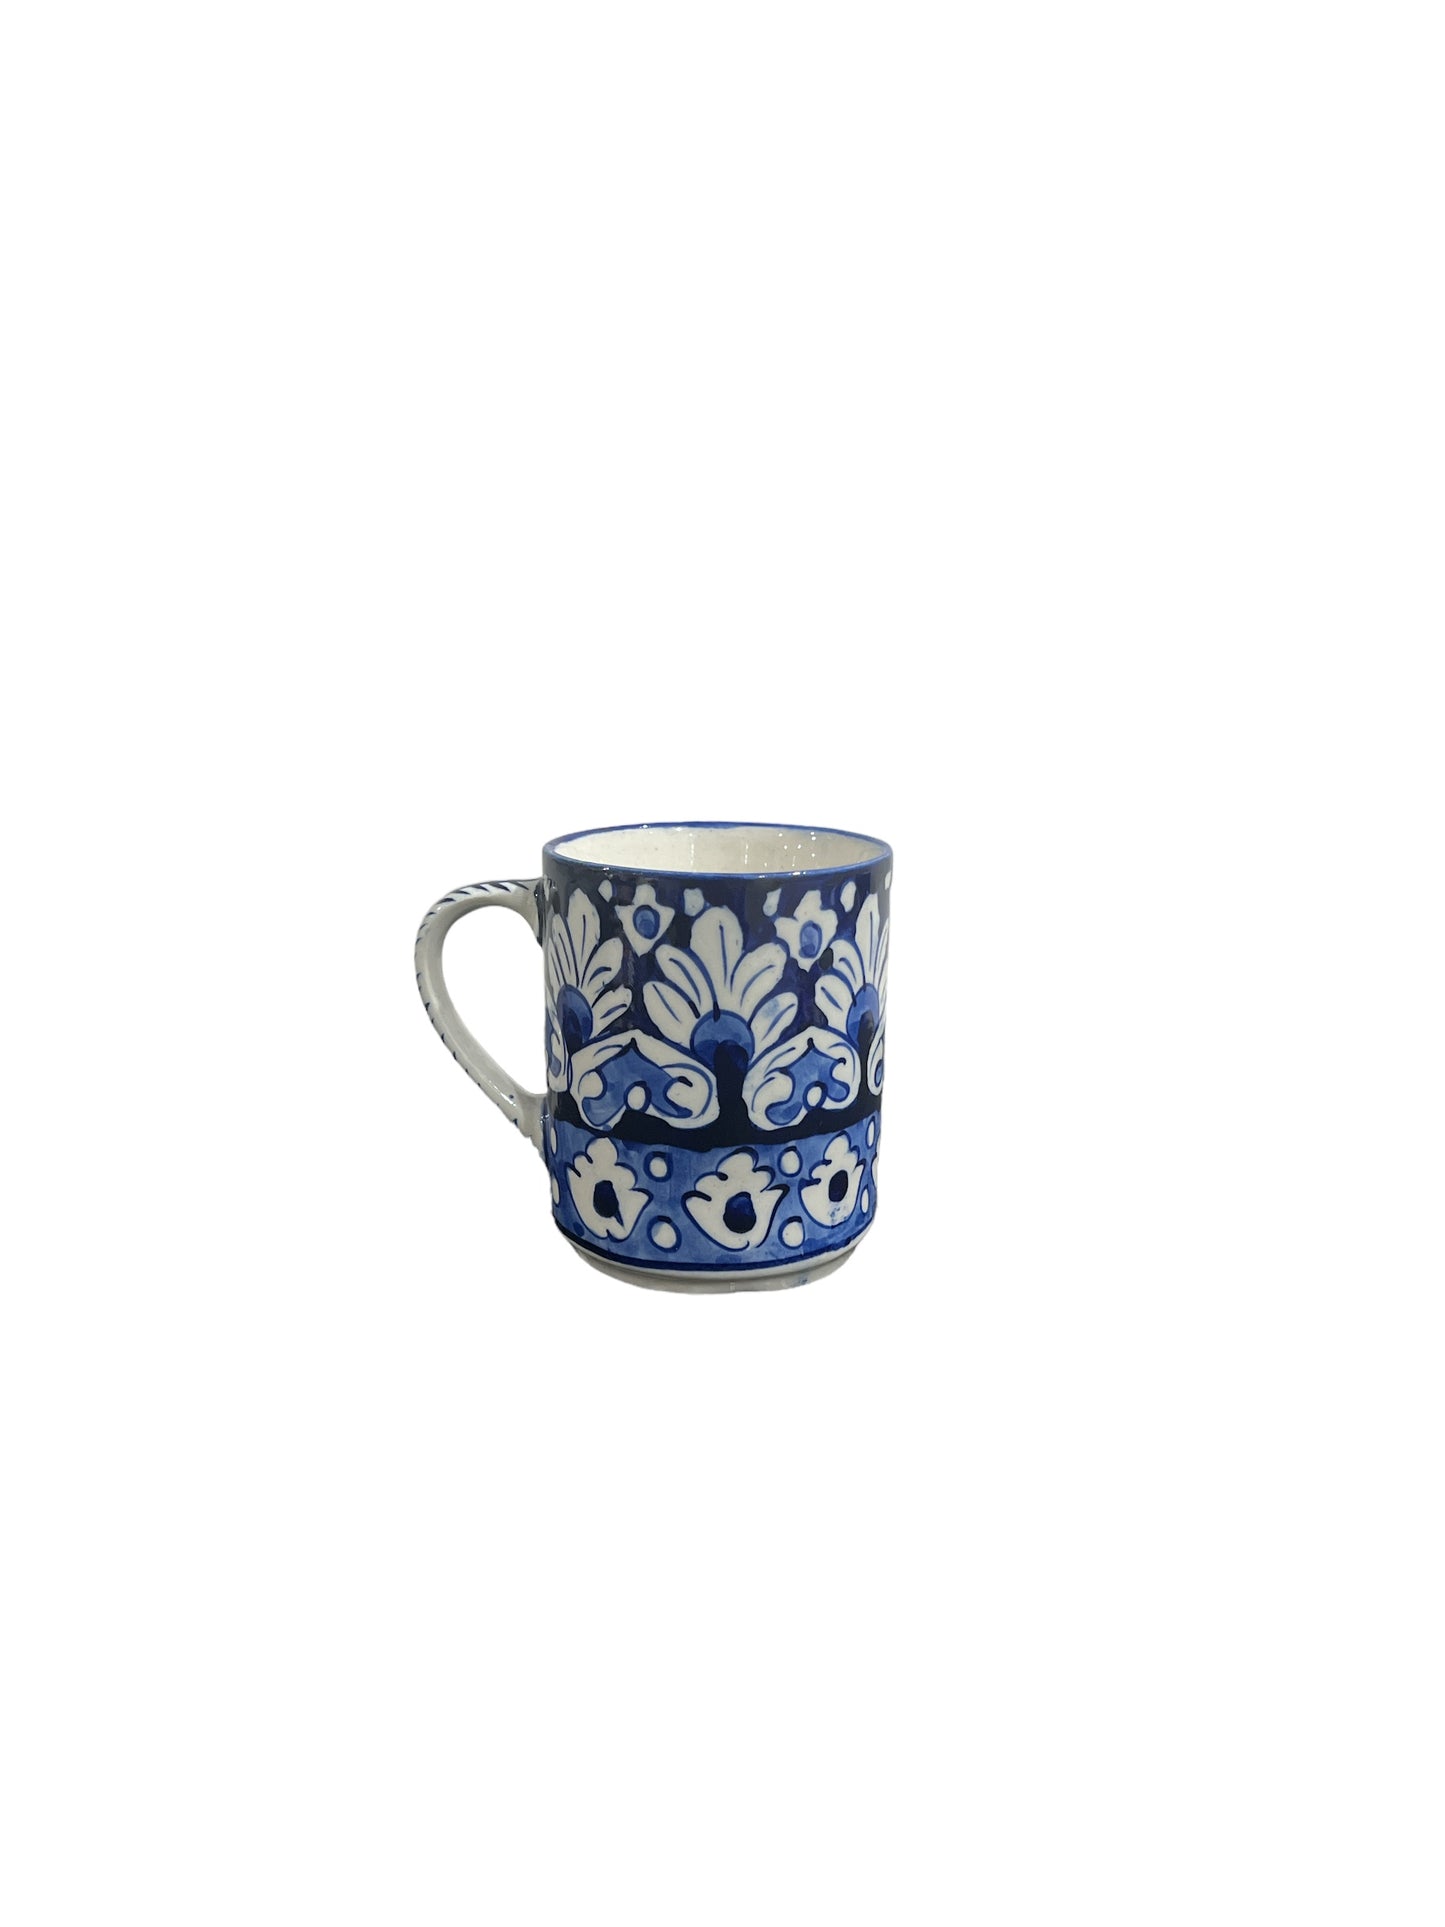 Blue Pottery Tea Coffee Mug - Peacock Feather Design (Set of 2)